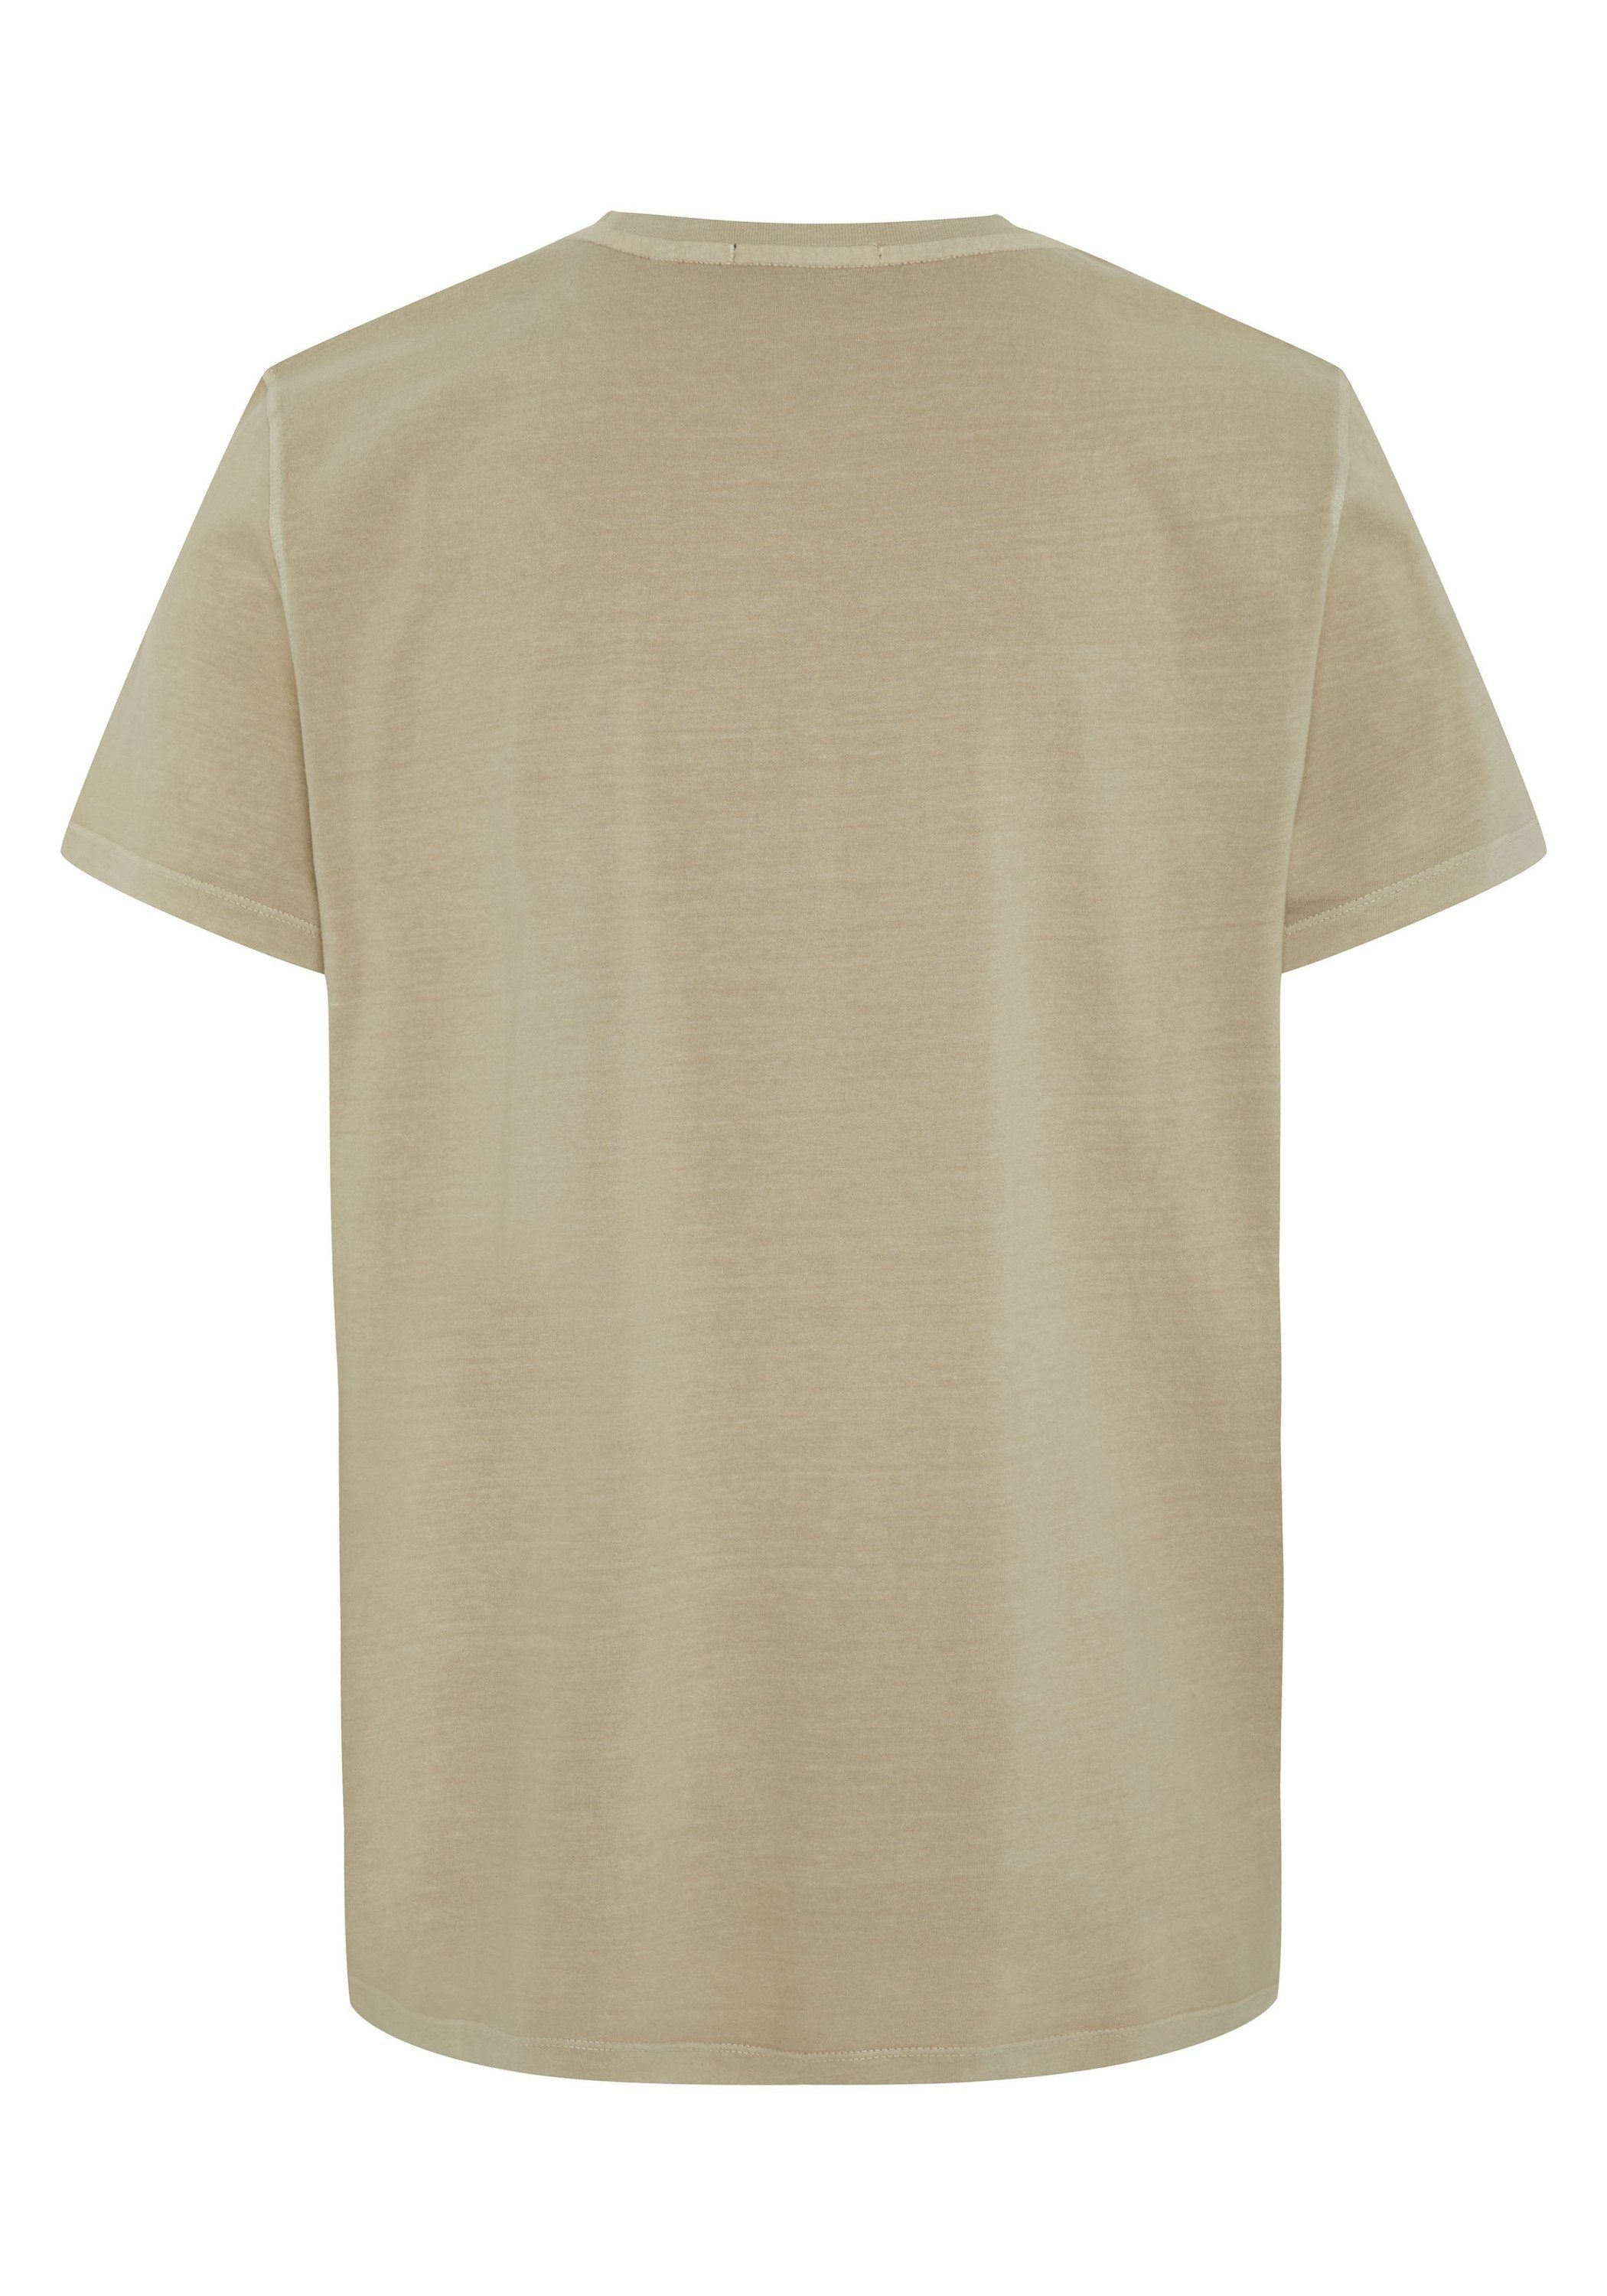 Tan T-Shirt 15-1306 1 aus Oxford Print-Shirt Baumwolljersey Chiemsee